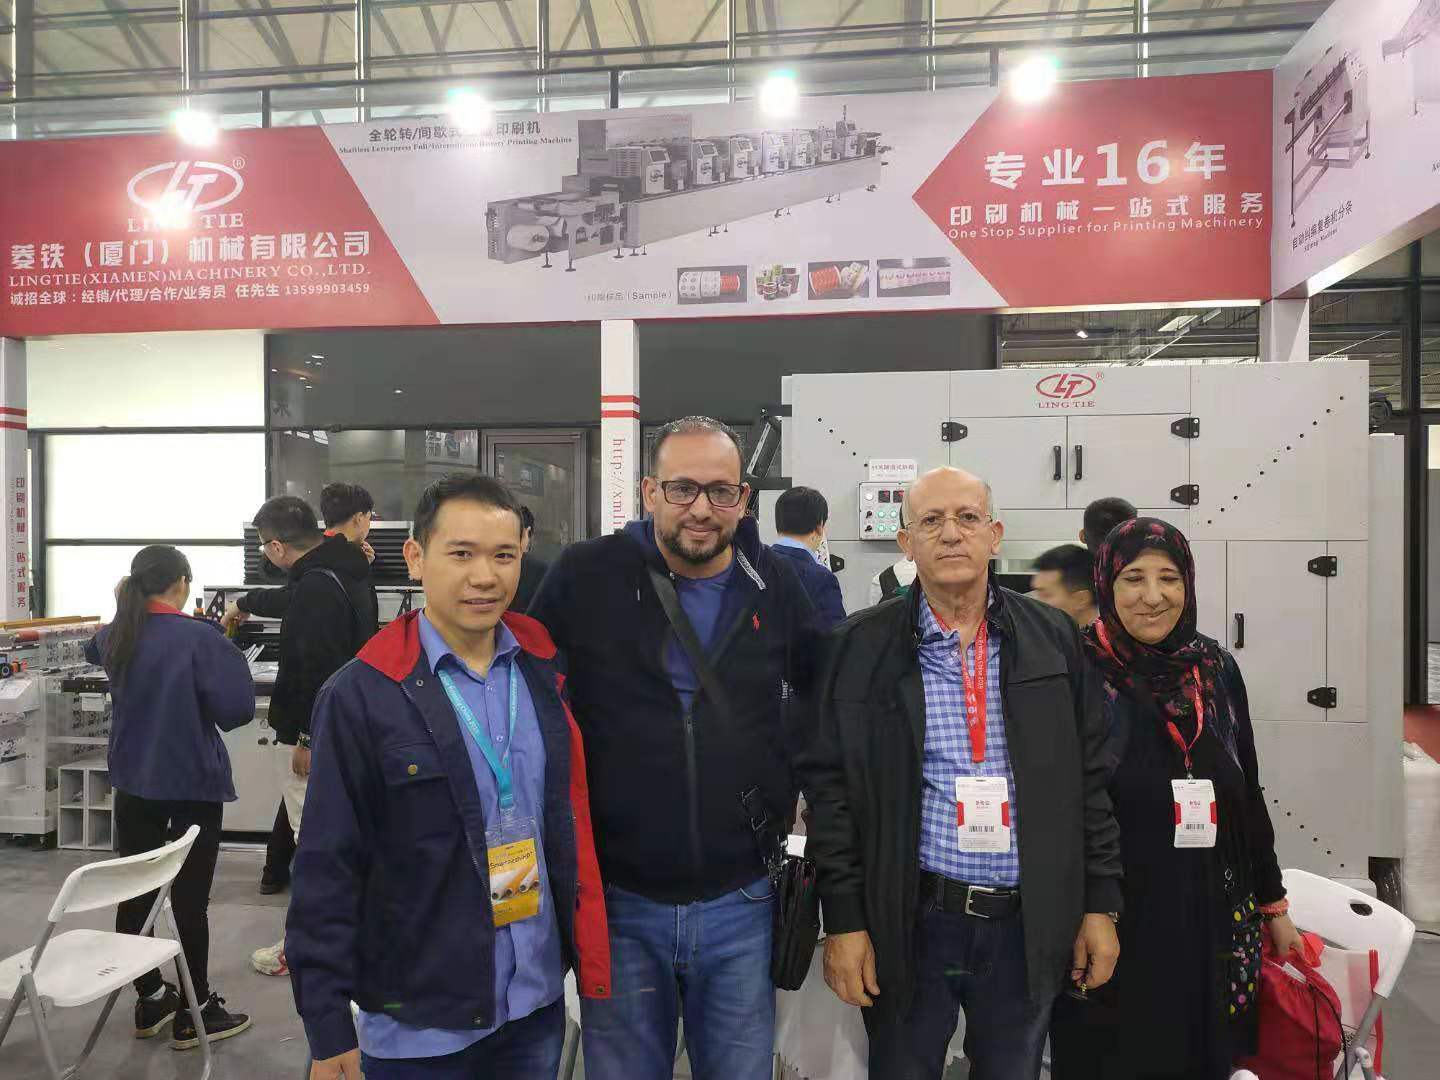 Textile Digital printing show in Shanghai 